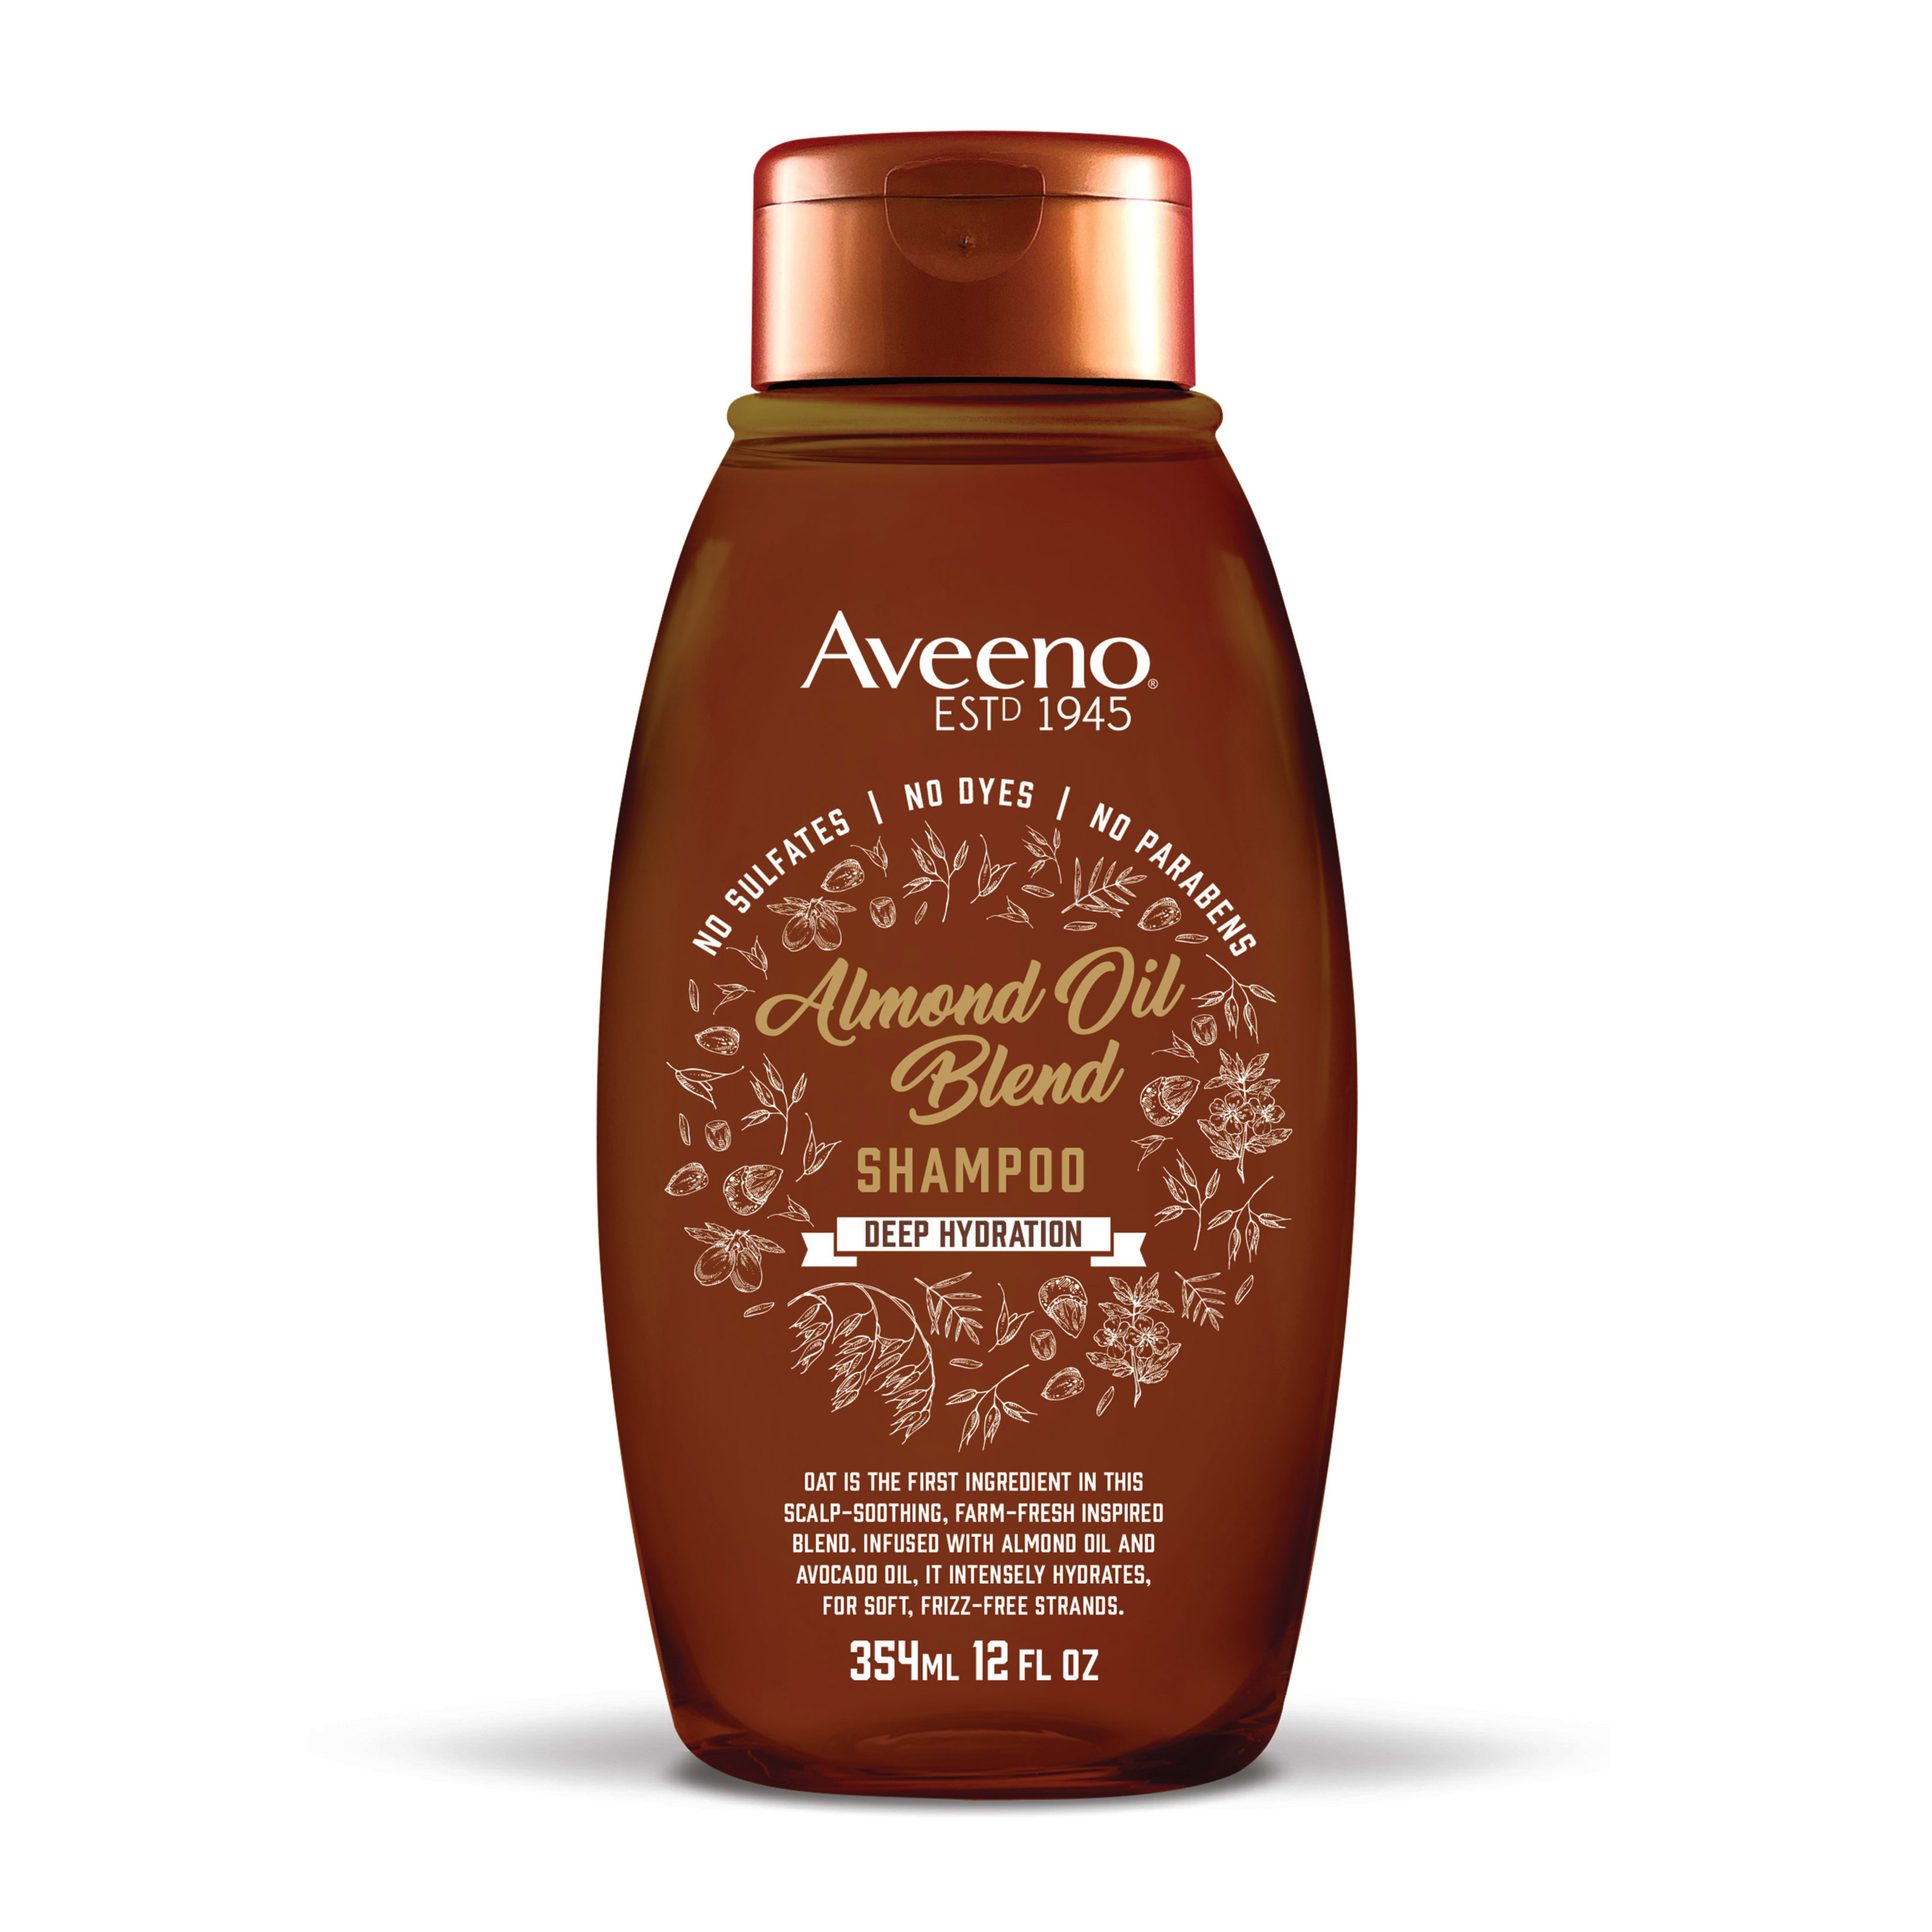 Aveeno Shampoo Almond Oil Blend 12 Ounce (354ml) - image 1 of 8